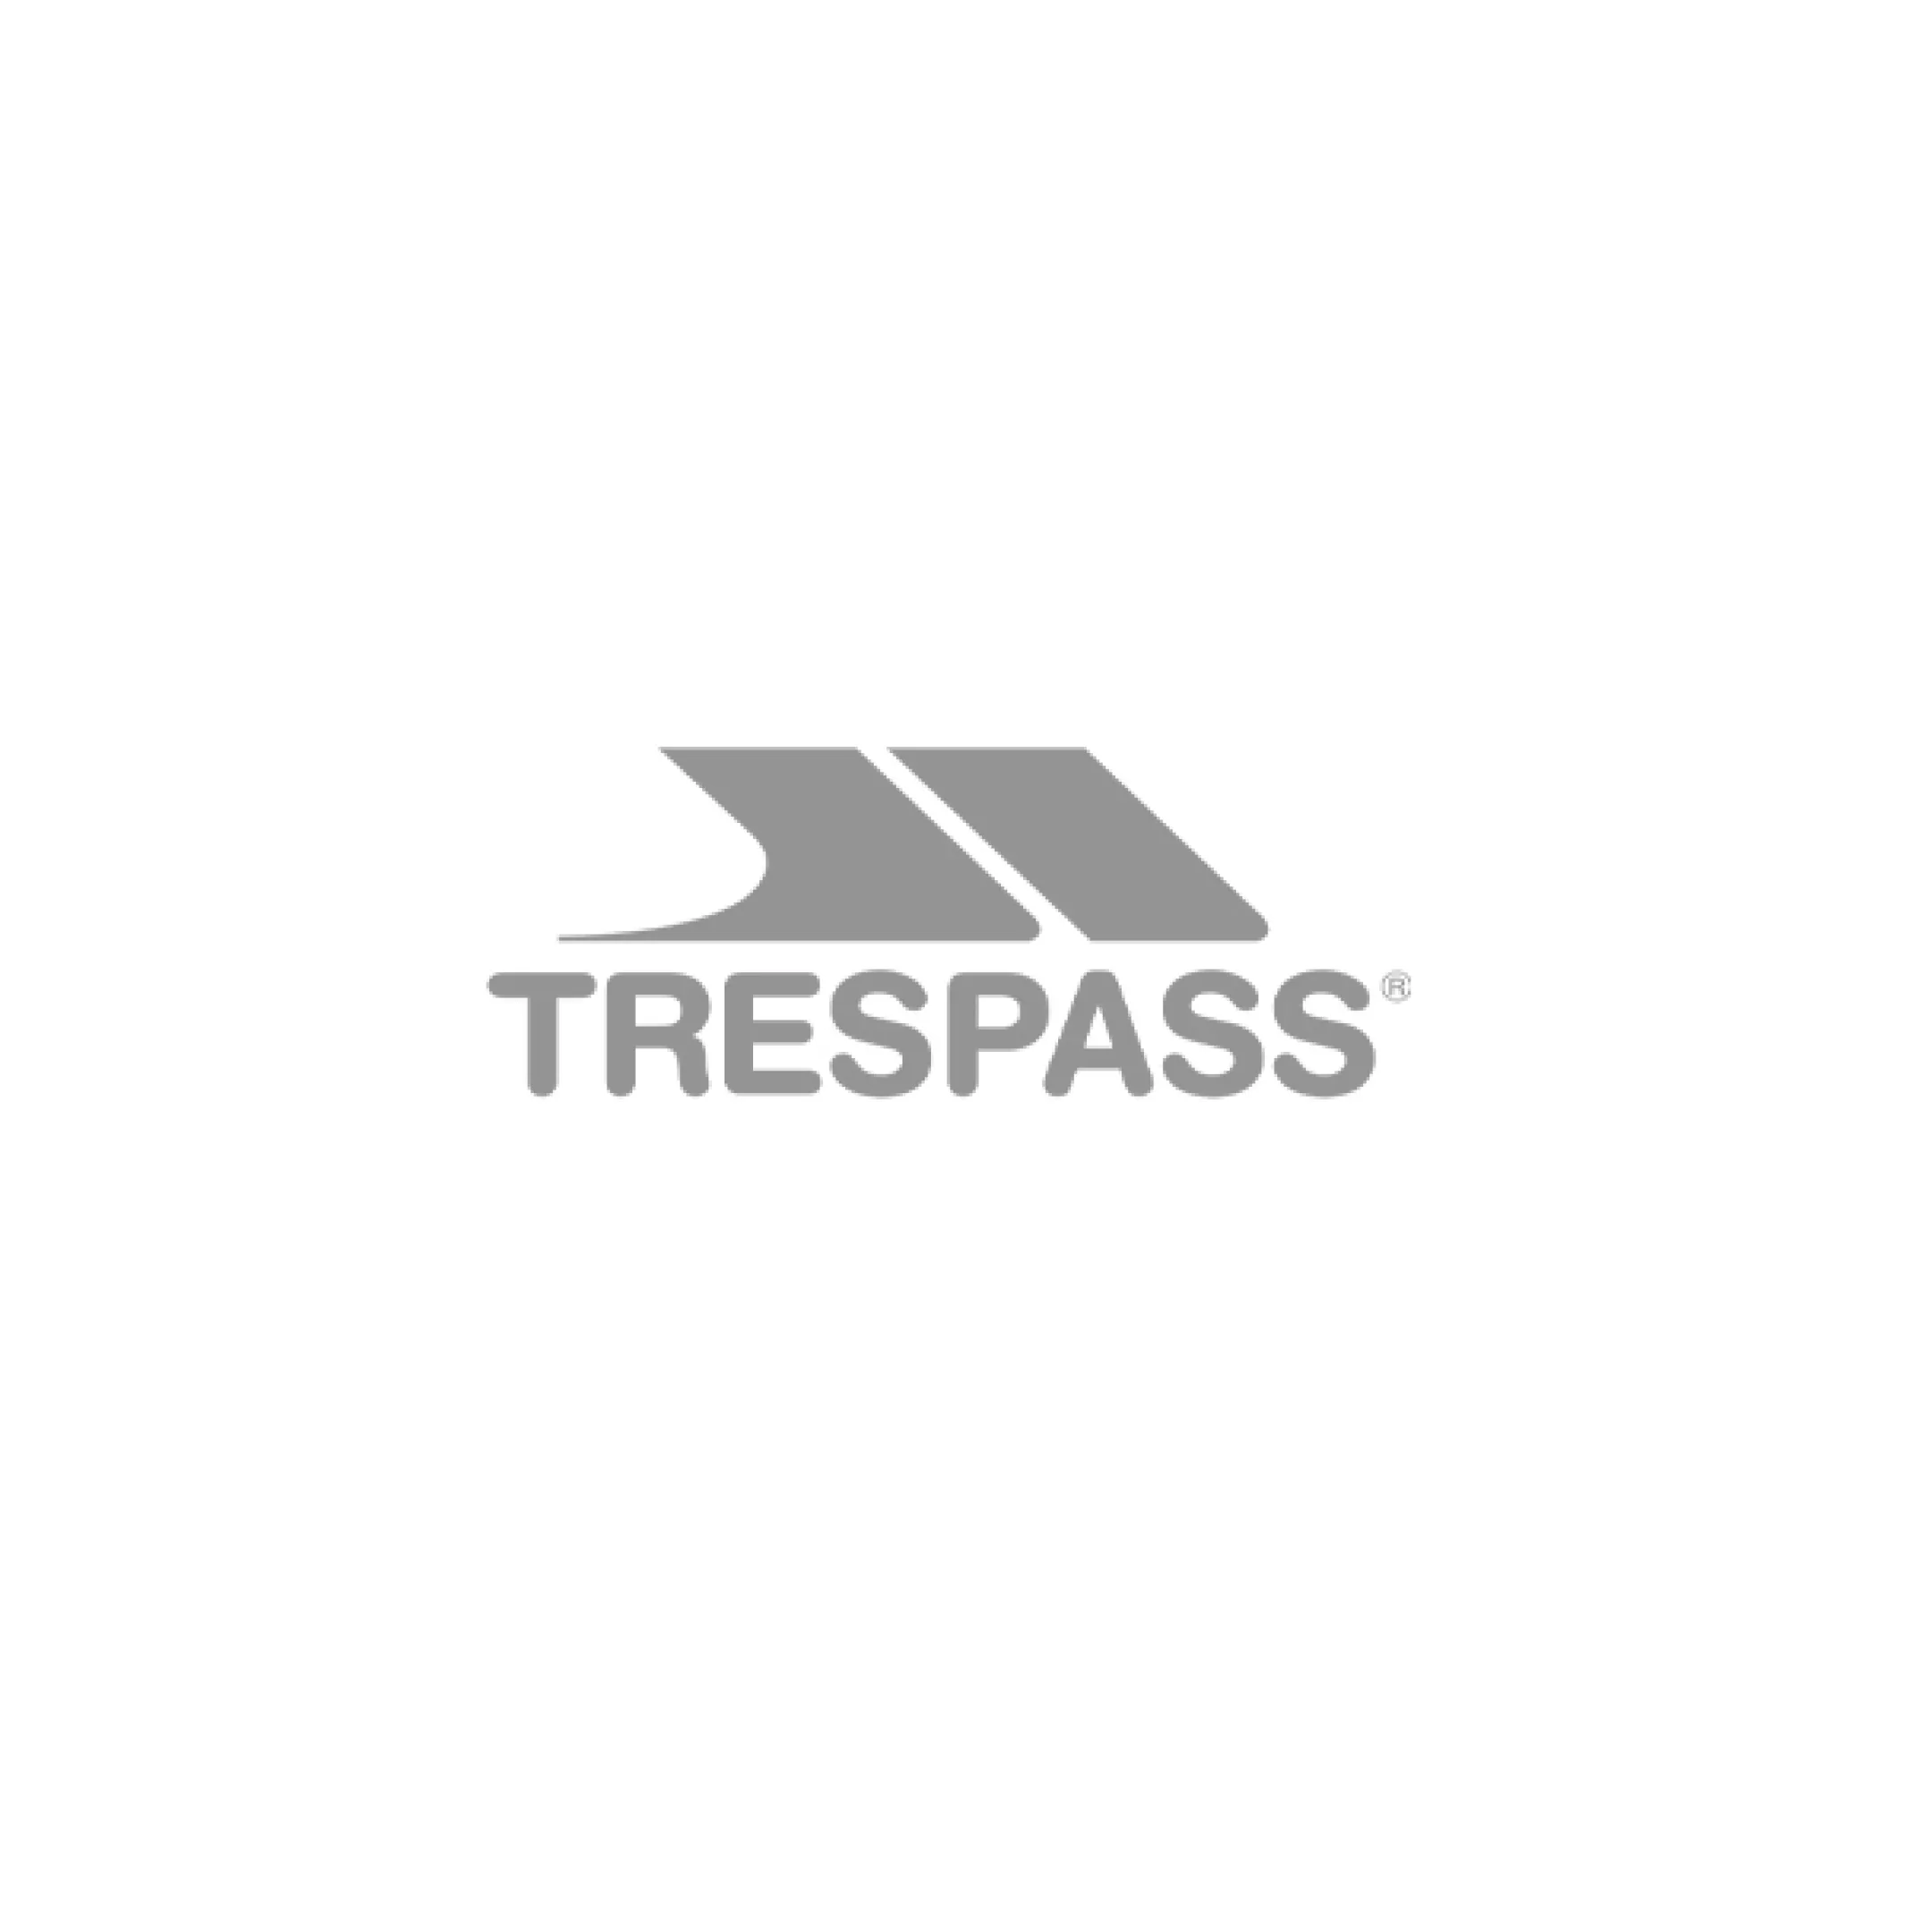 Hand Warmers | Trespass Store